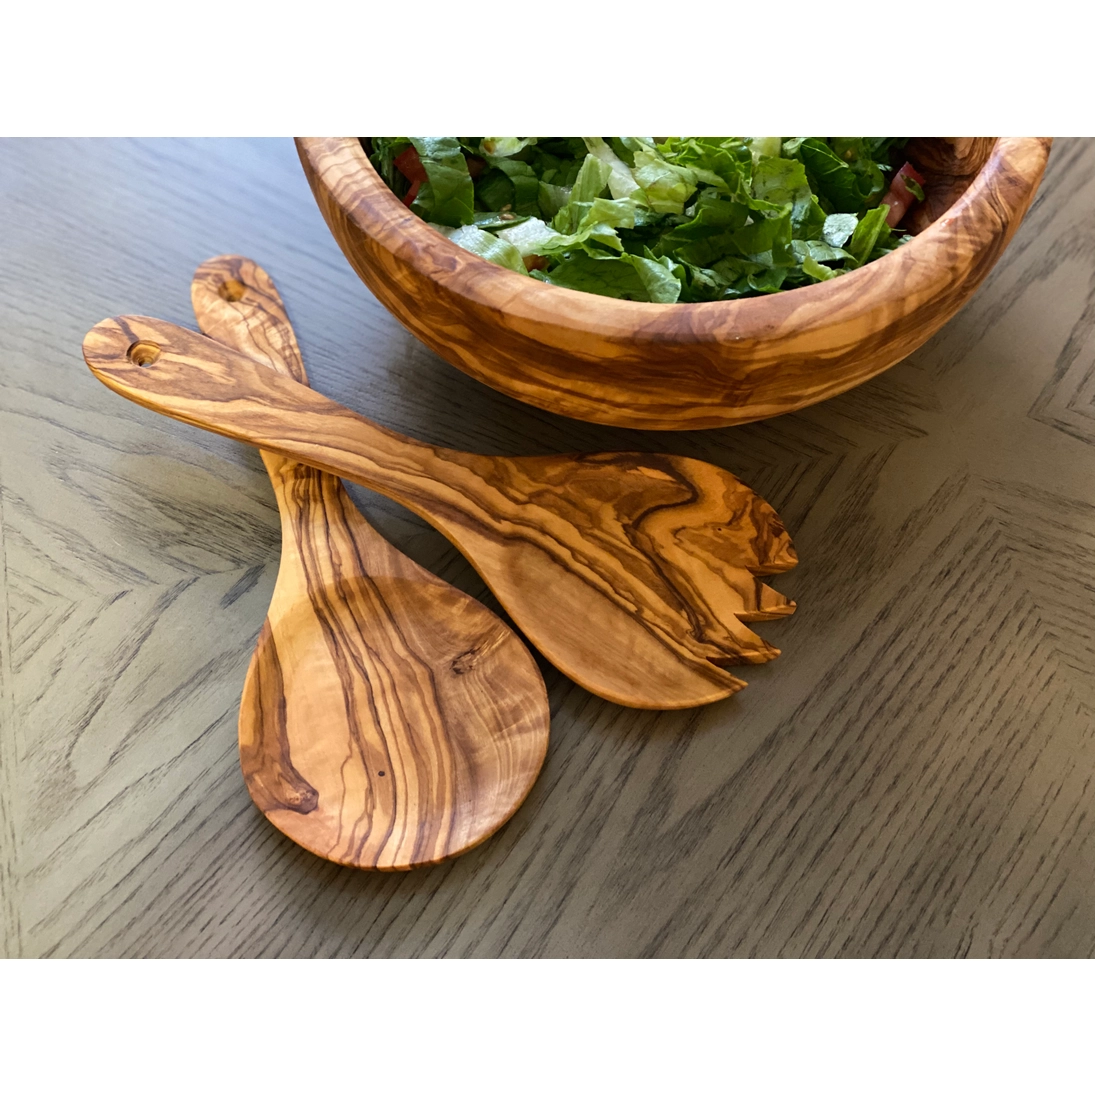 Olive Wood Slotted Spoon – RSVP International